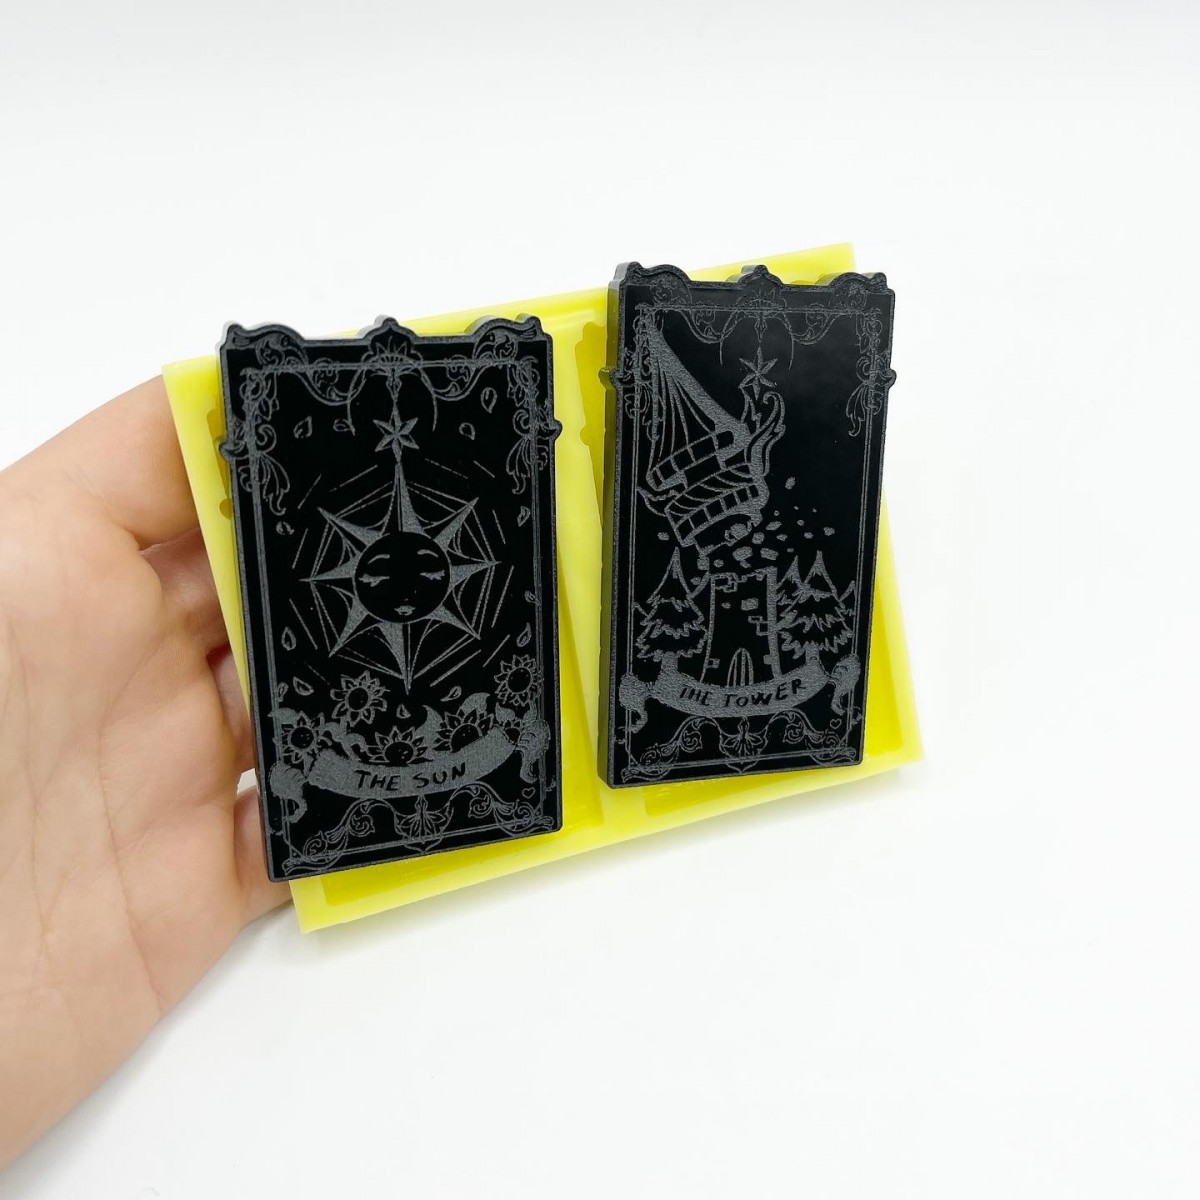 Set of "The Sun" and "The Tower" Tarot Cards Mold - medium size